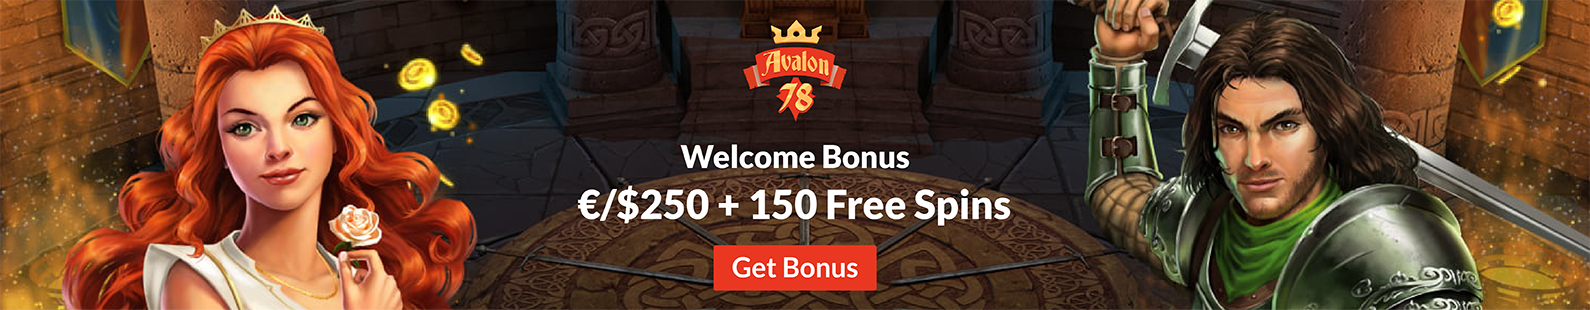 Avalon78 Casino: 100% Welcome Bonus up to €/$250 plus 150 Free Spins